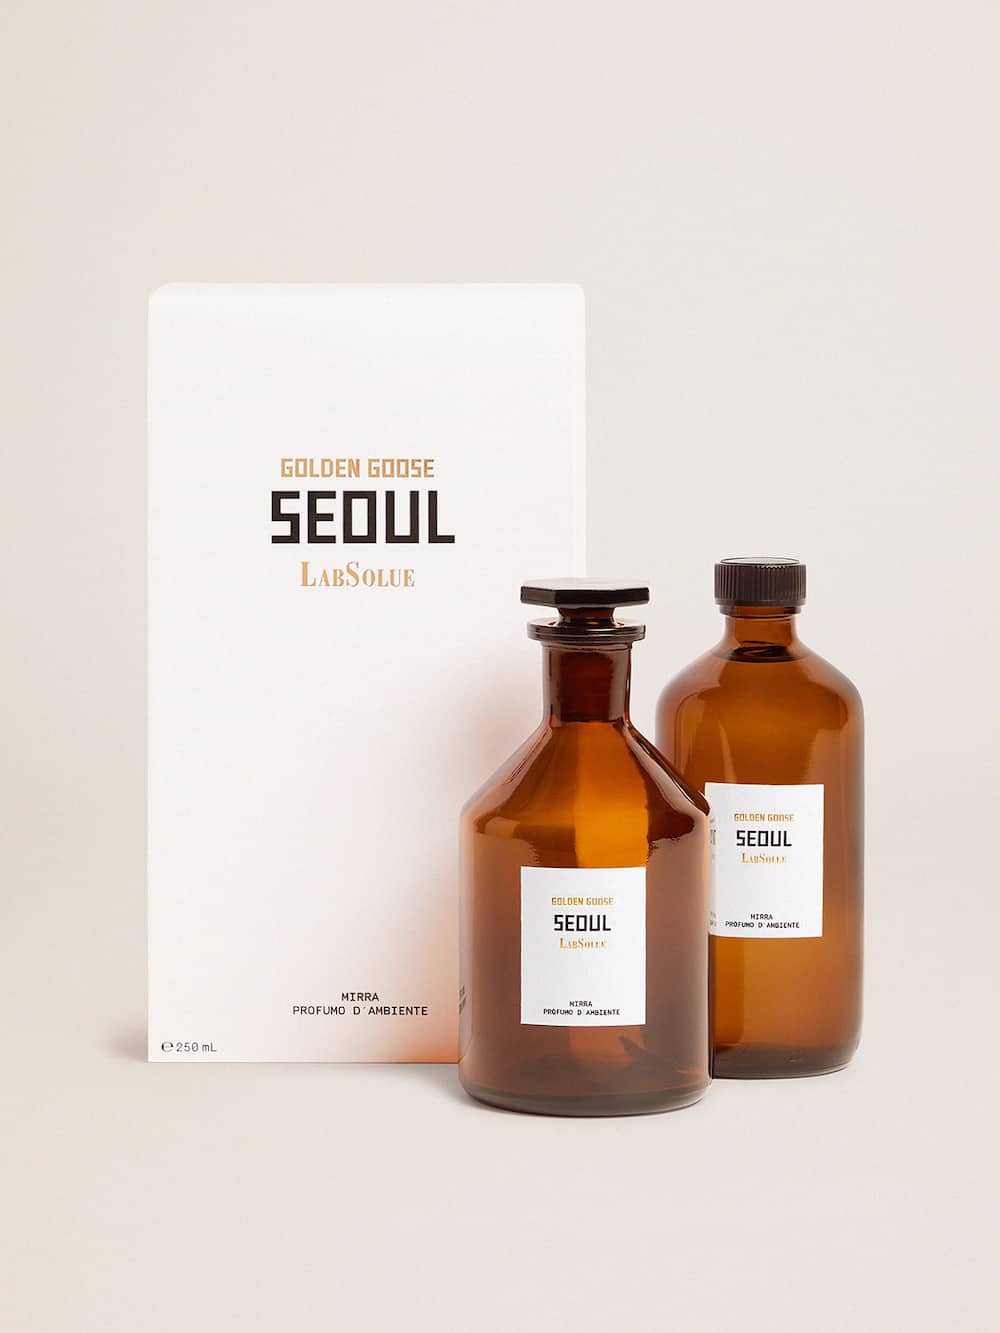 Golden Goose - Seoul Essence Mirra Fragranza d'ambiente 250 ml in 